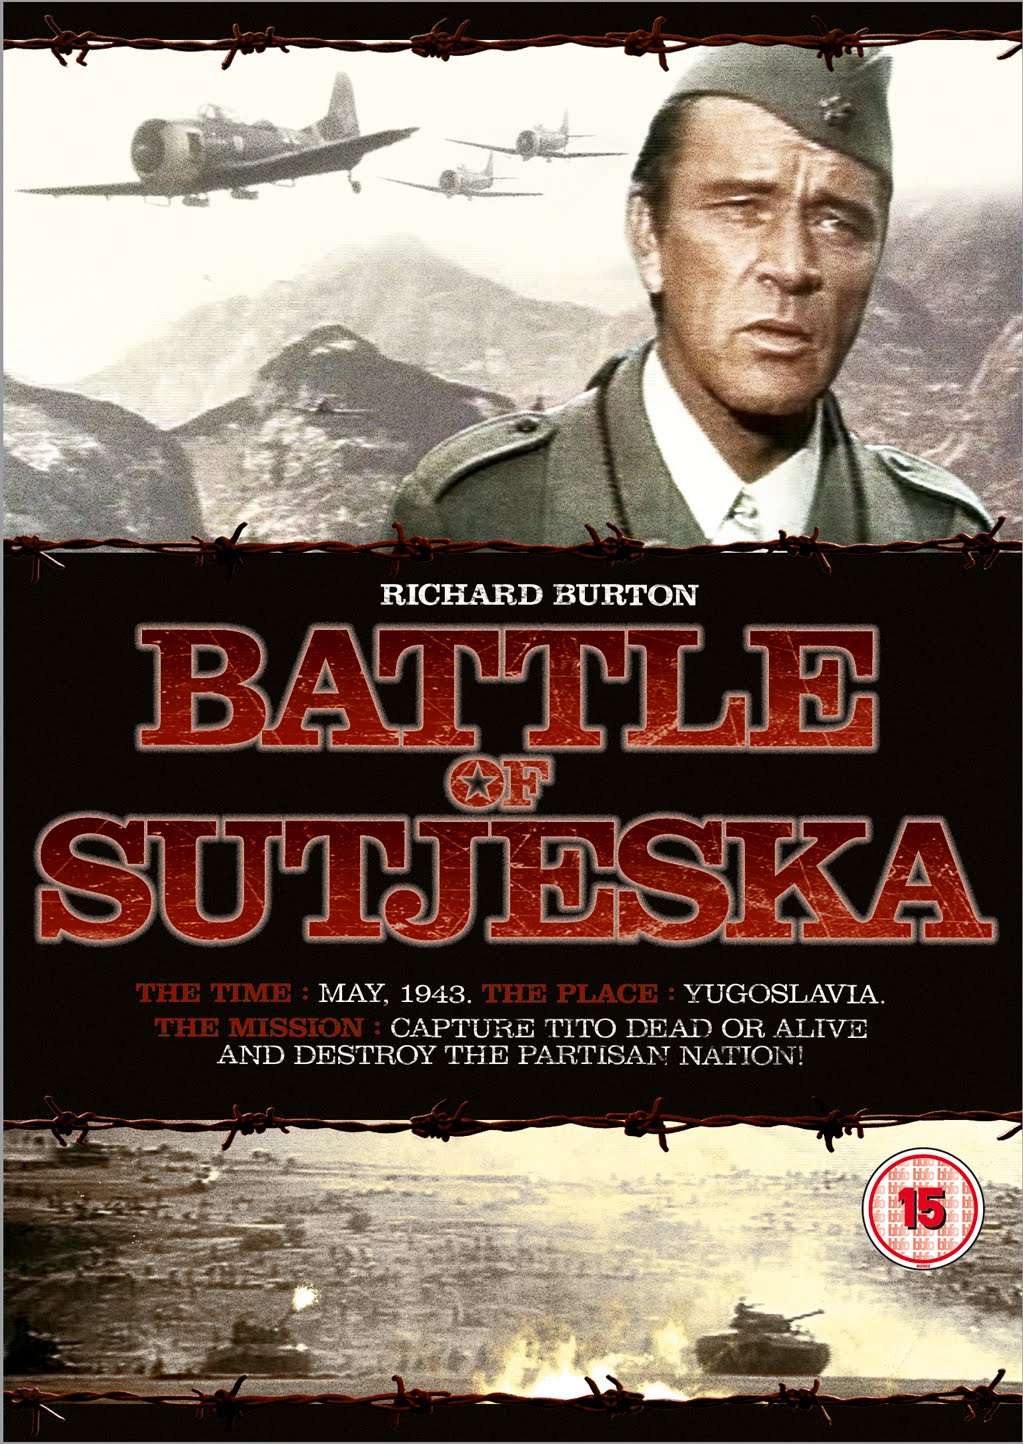 FILM PERANG DUNIA: BATTLE OF SUTJESKA / THE FIFTH 